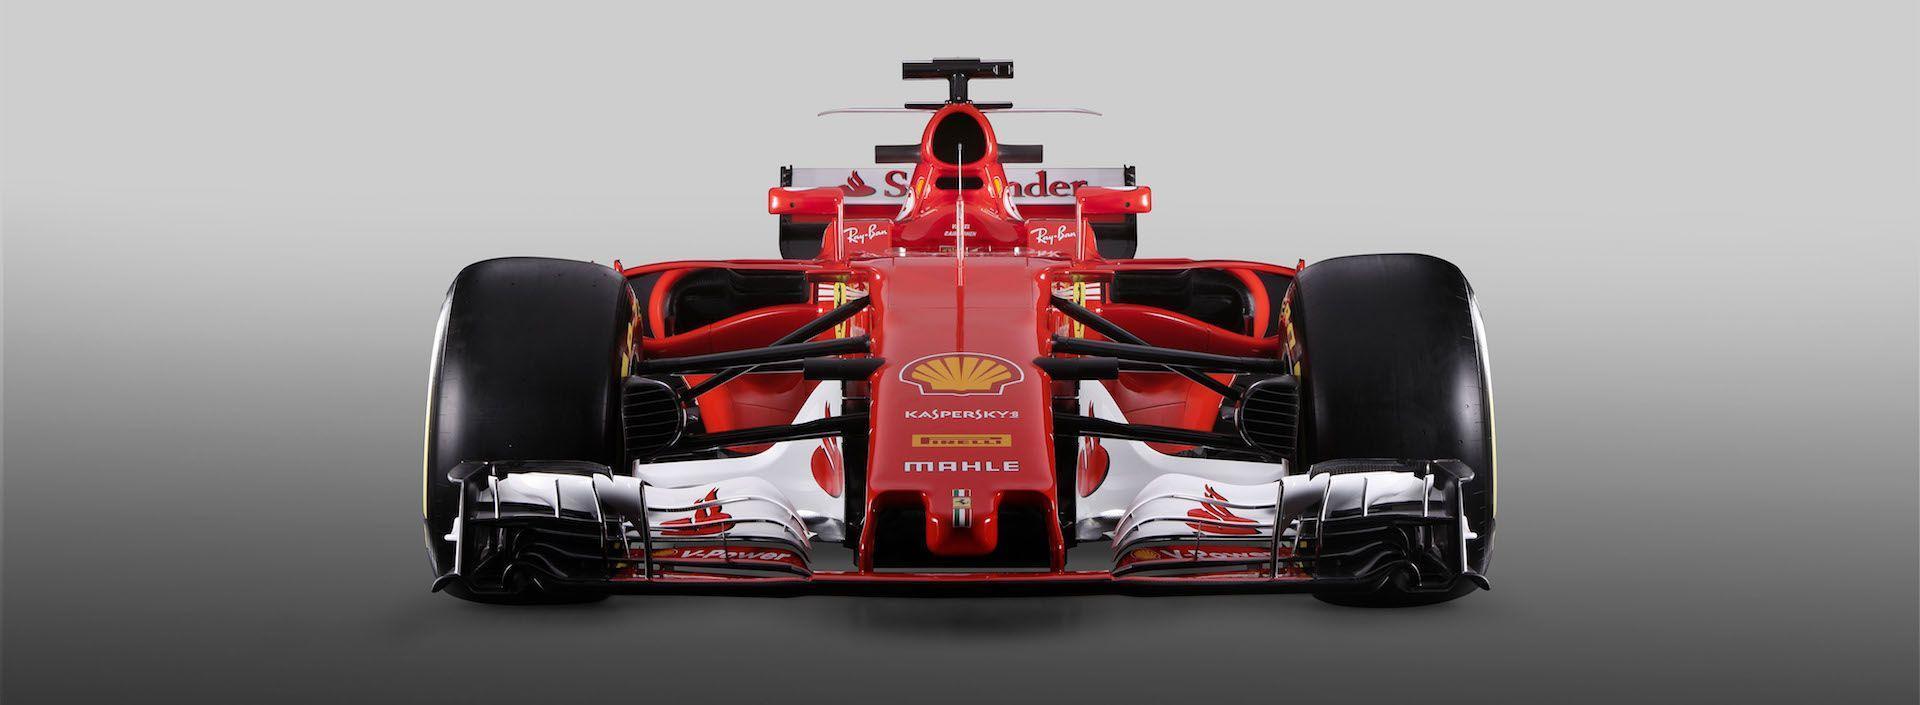 Ferrari&;s New Formula 1 Car Is Named SF70H